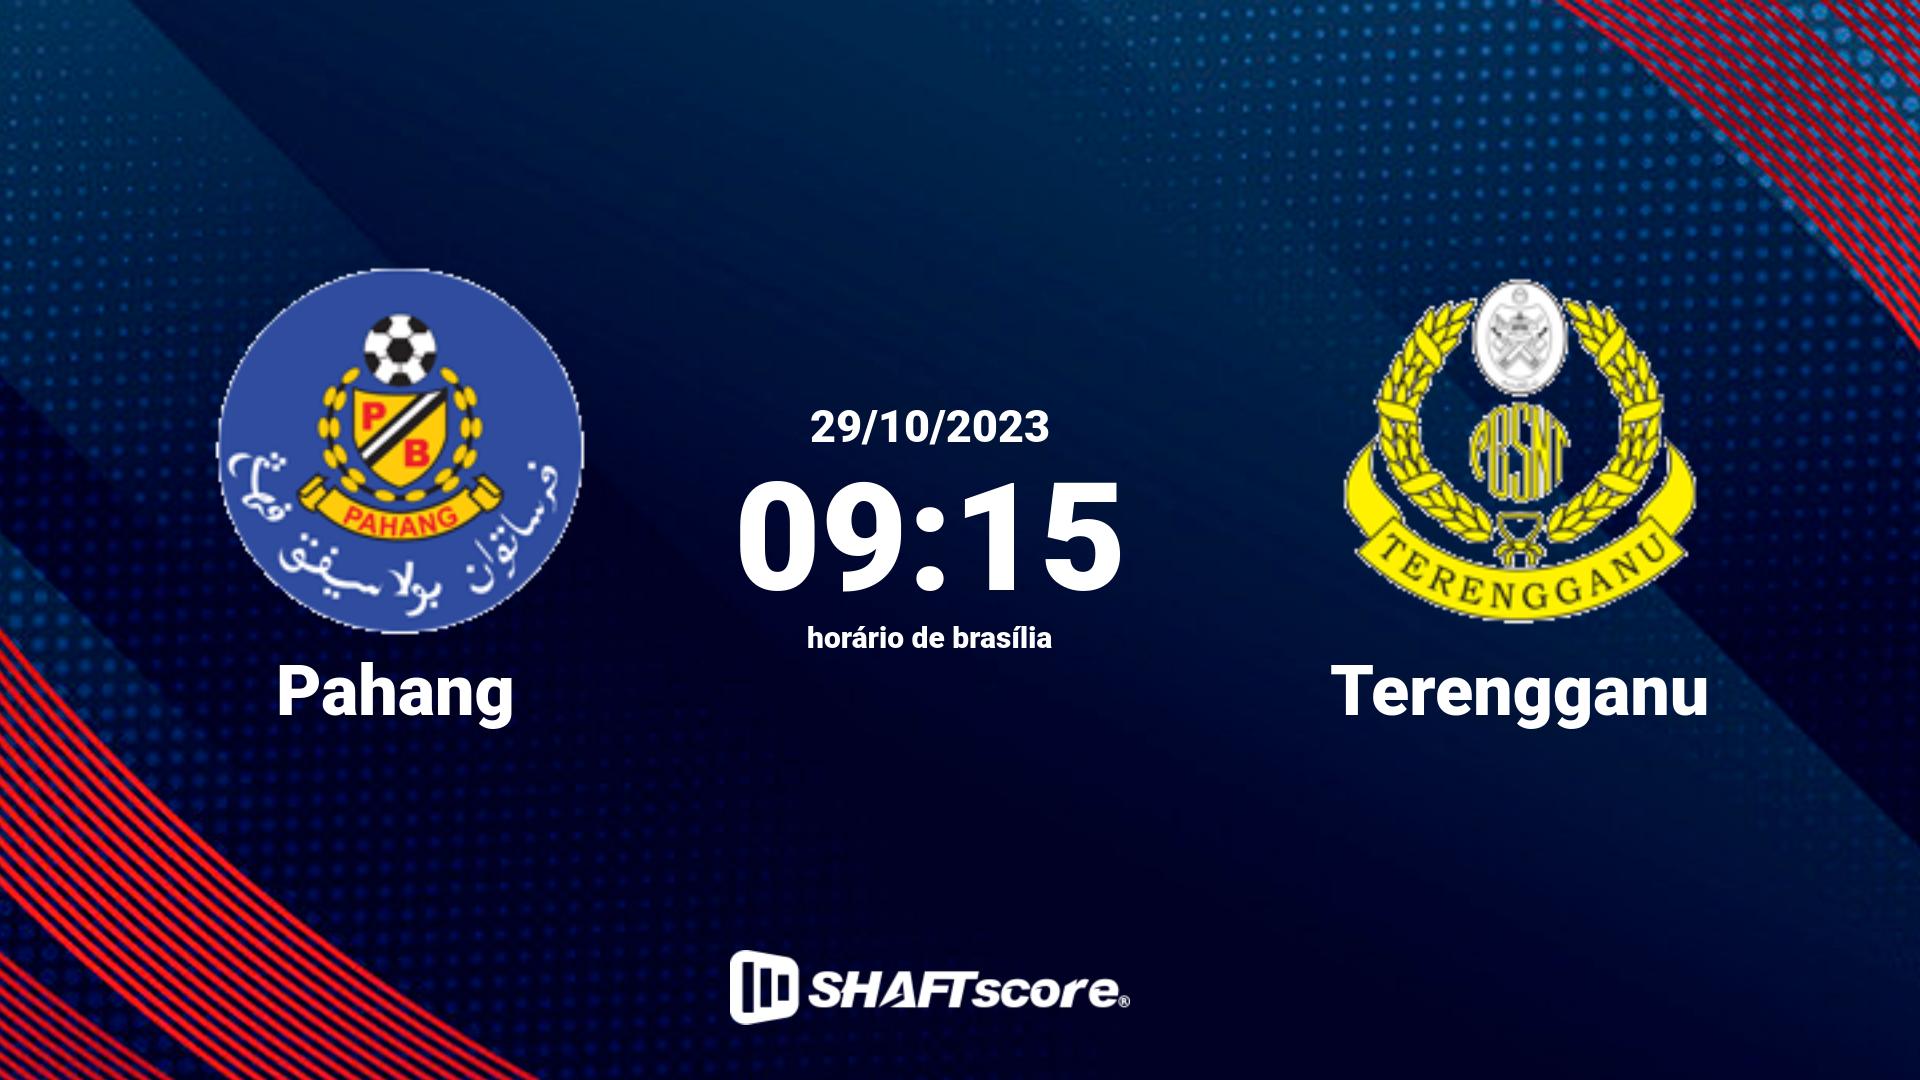 Estatísticas do jogo Pahang vs Terengganu 29.10 09:15